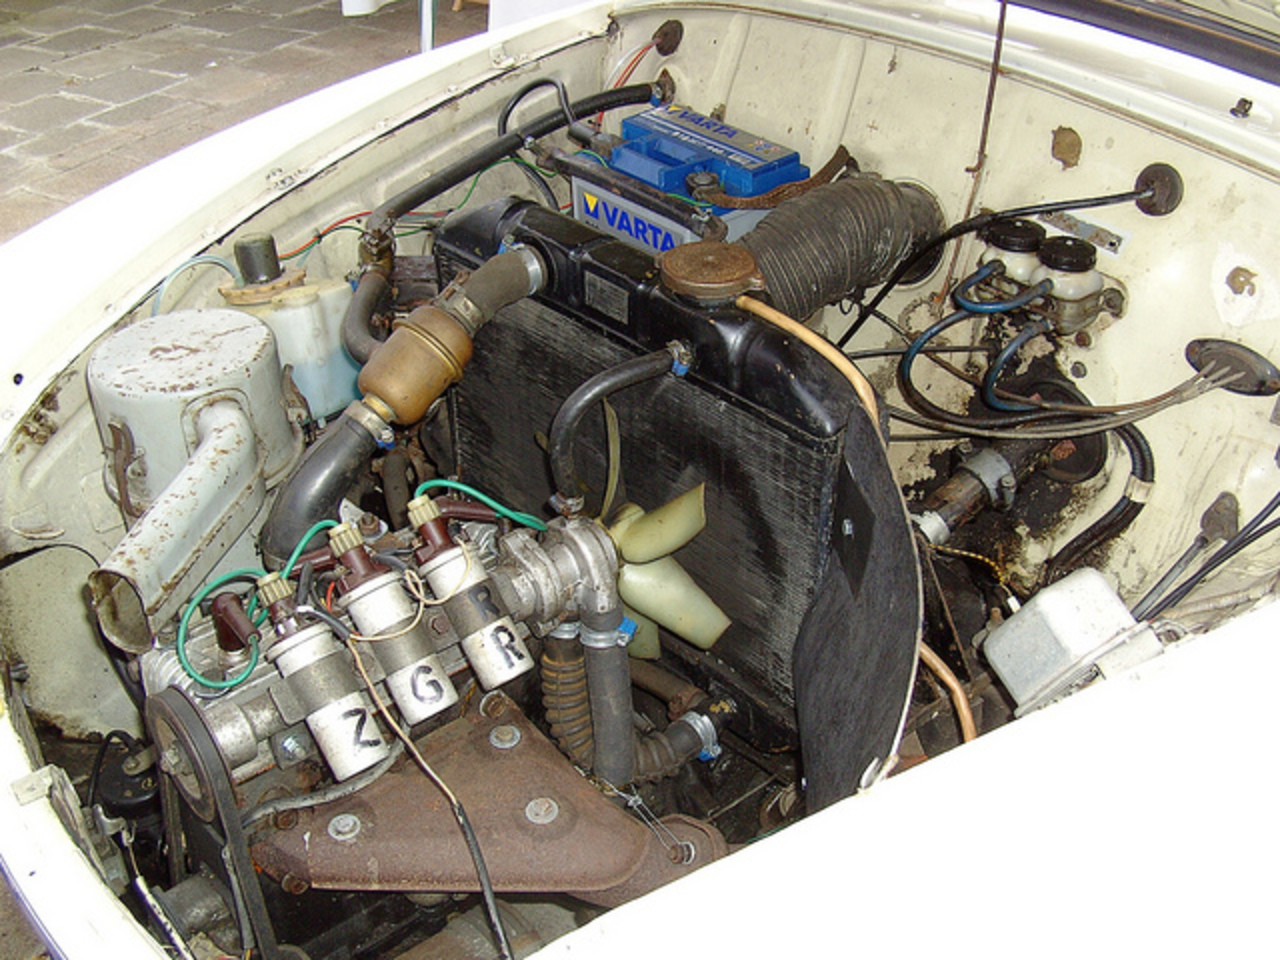 1976 FSM Syrena 105, the engine | Flickr - Photo Sharing!